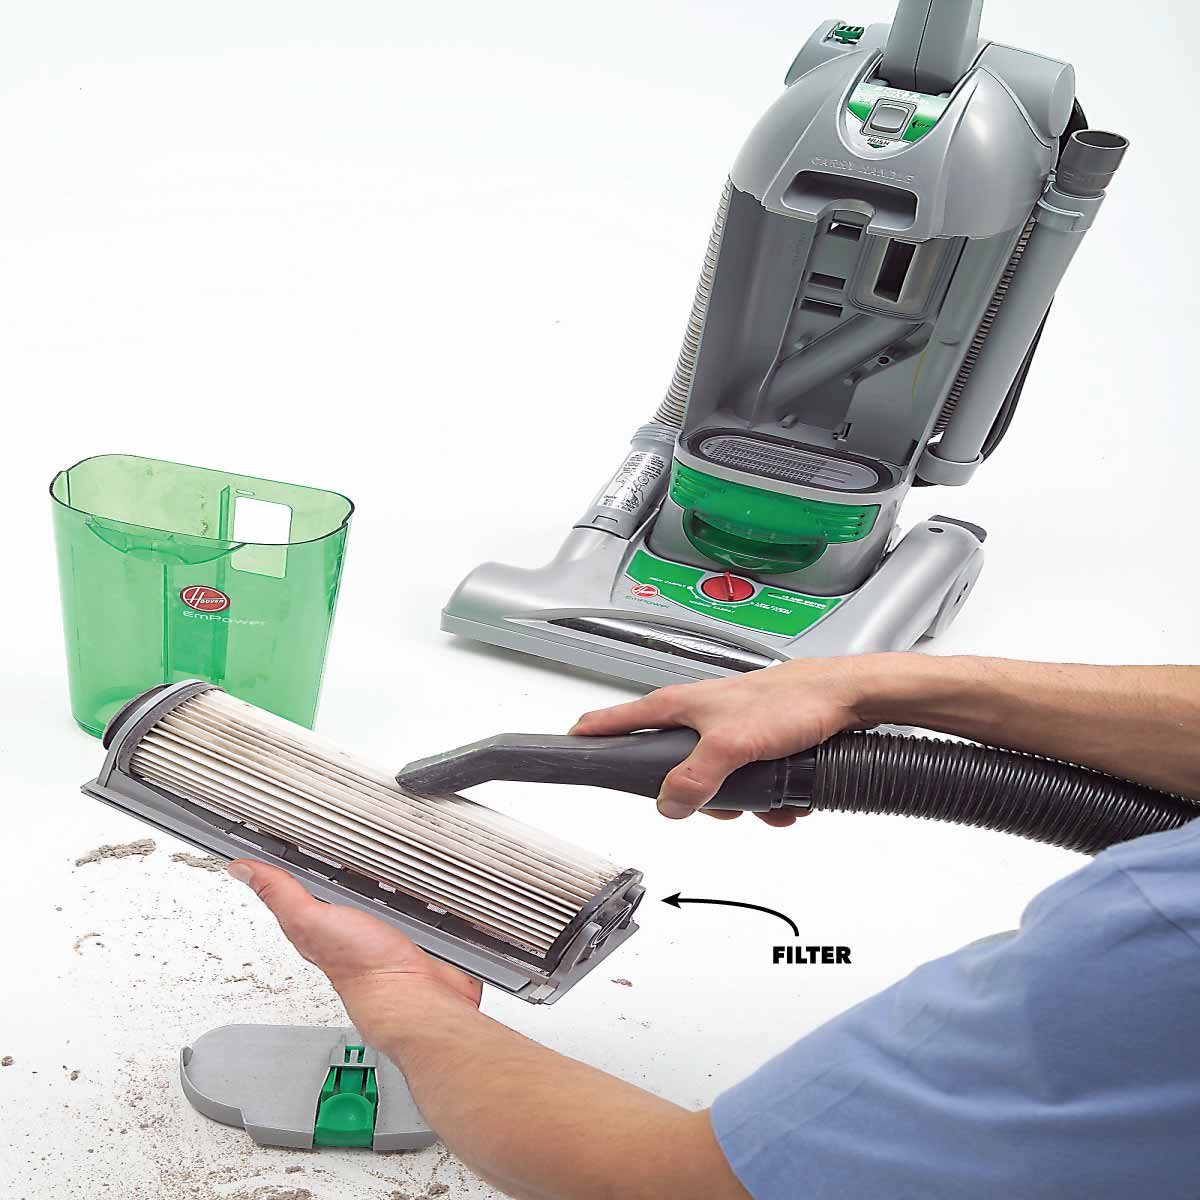 Clean Your Bagless Vacuum Filter